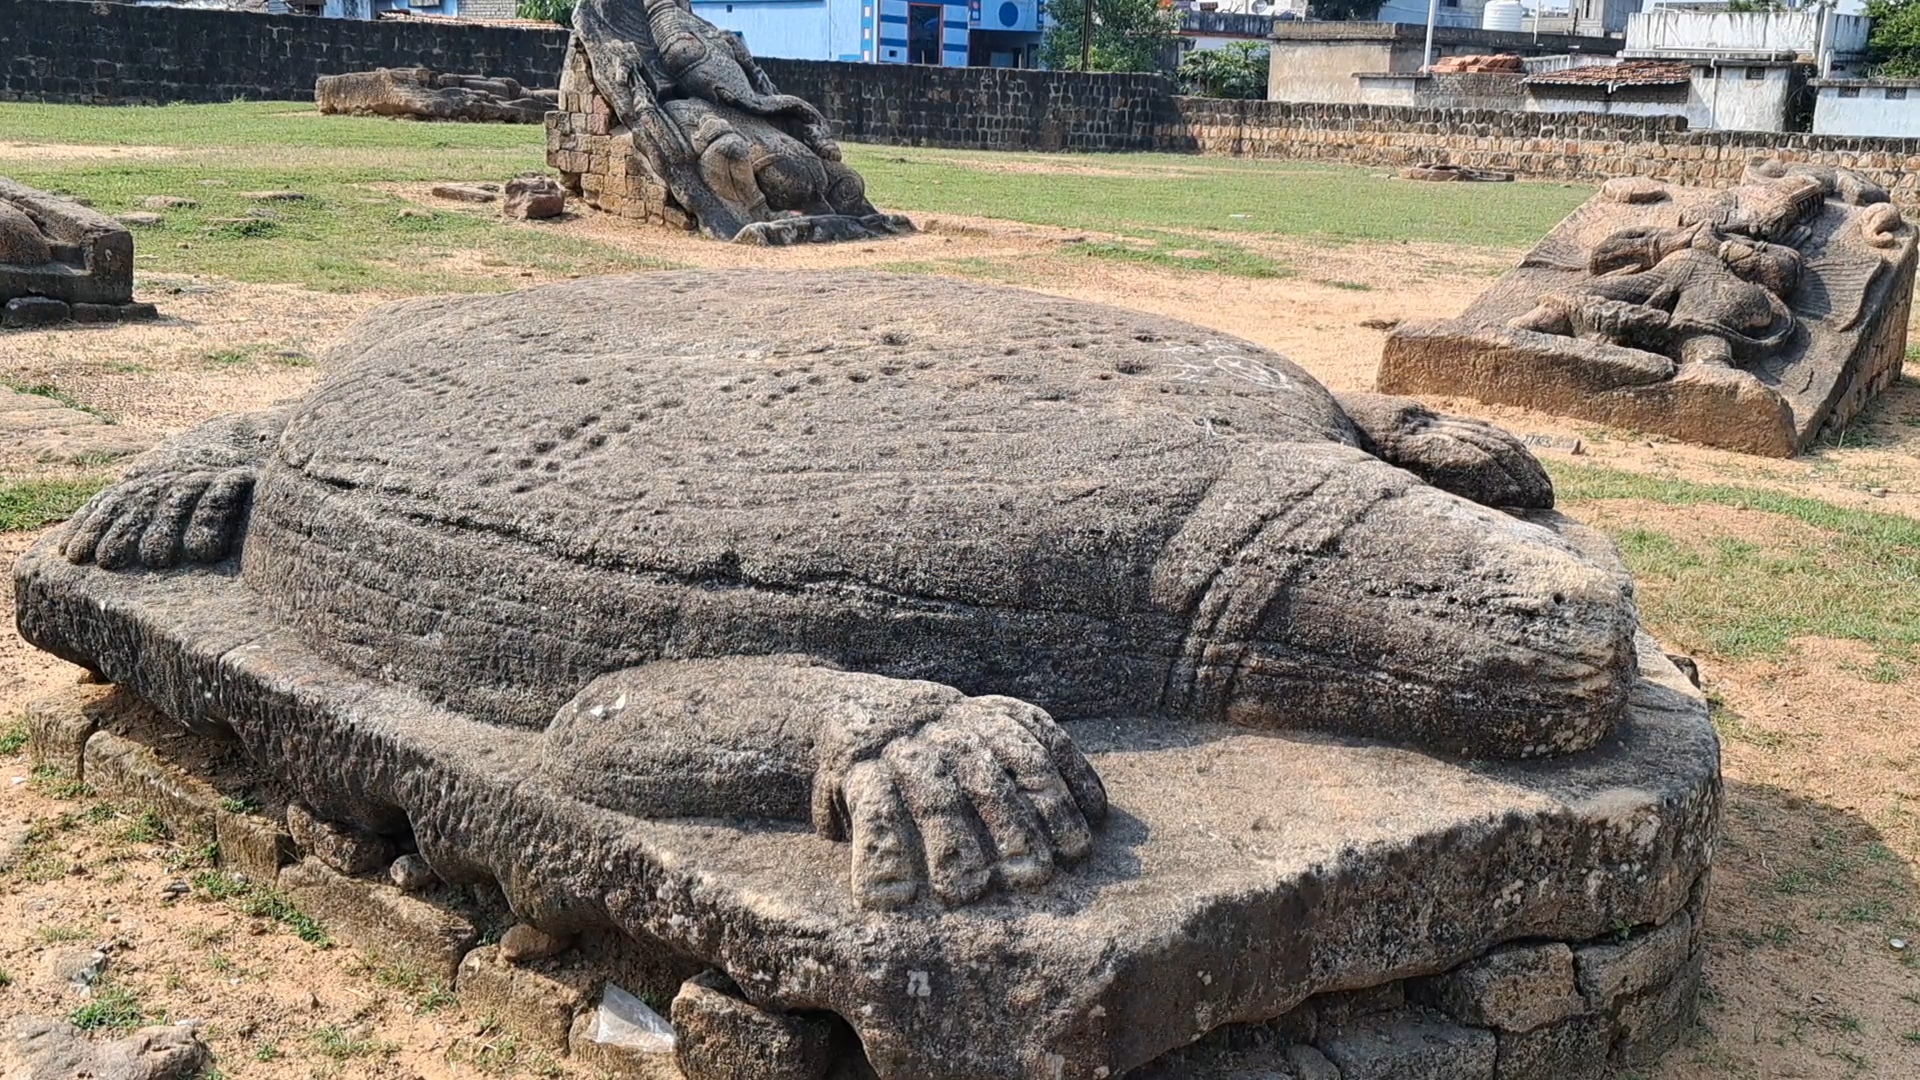 The largest idol of Goddess Durga